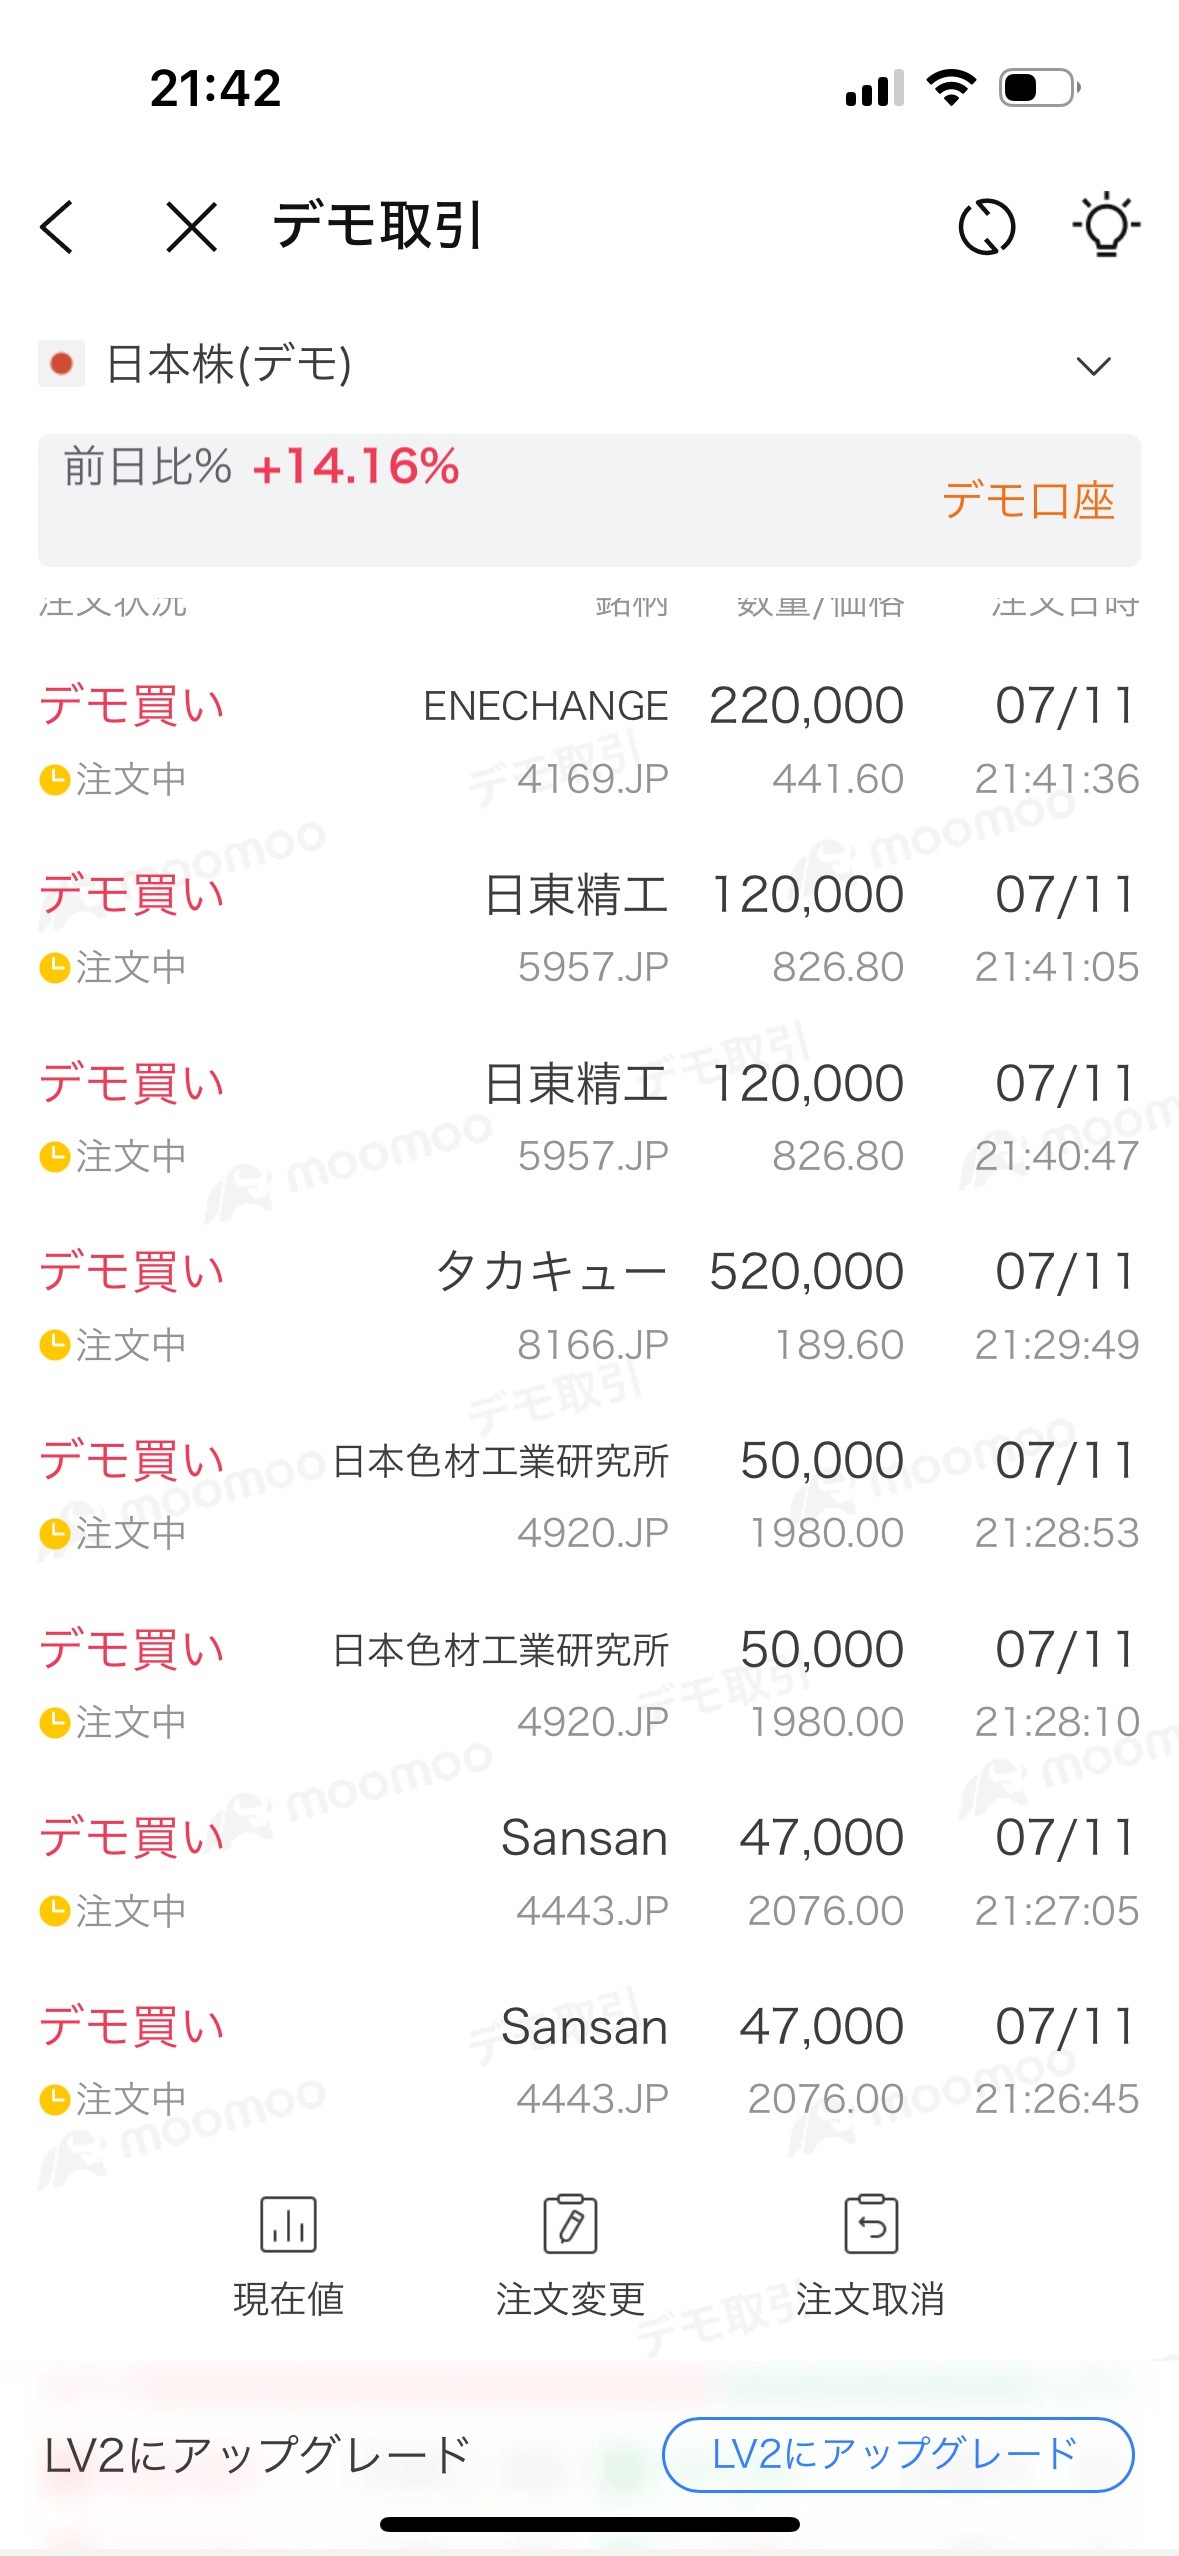 enechange、タカキューは買い増し。日東精工、日本色剤工業研究所、sansanの3本